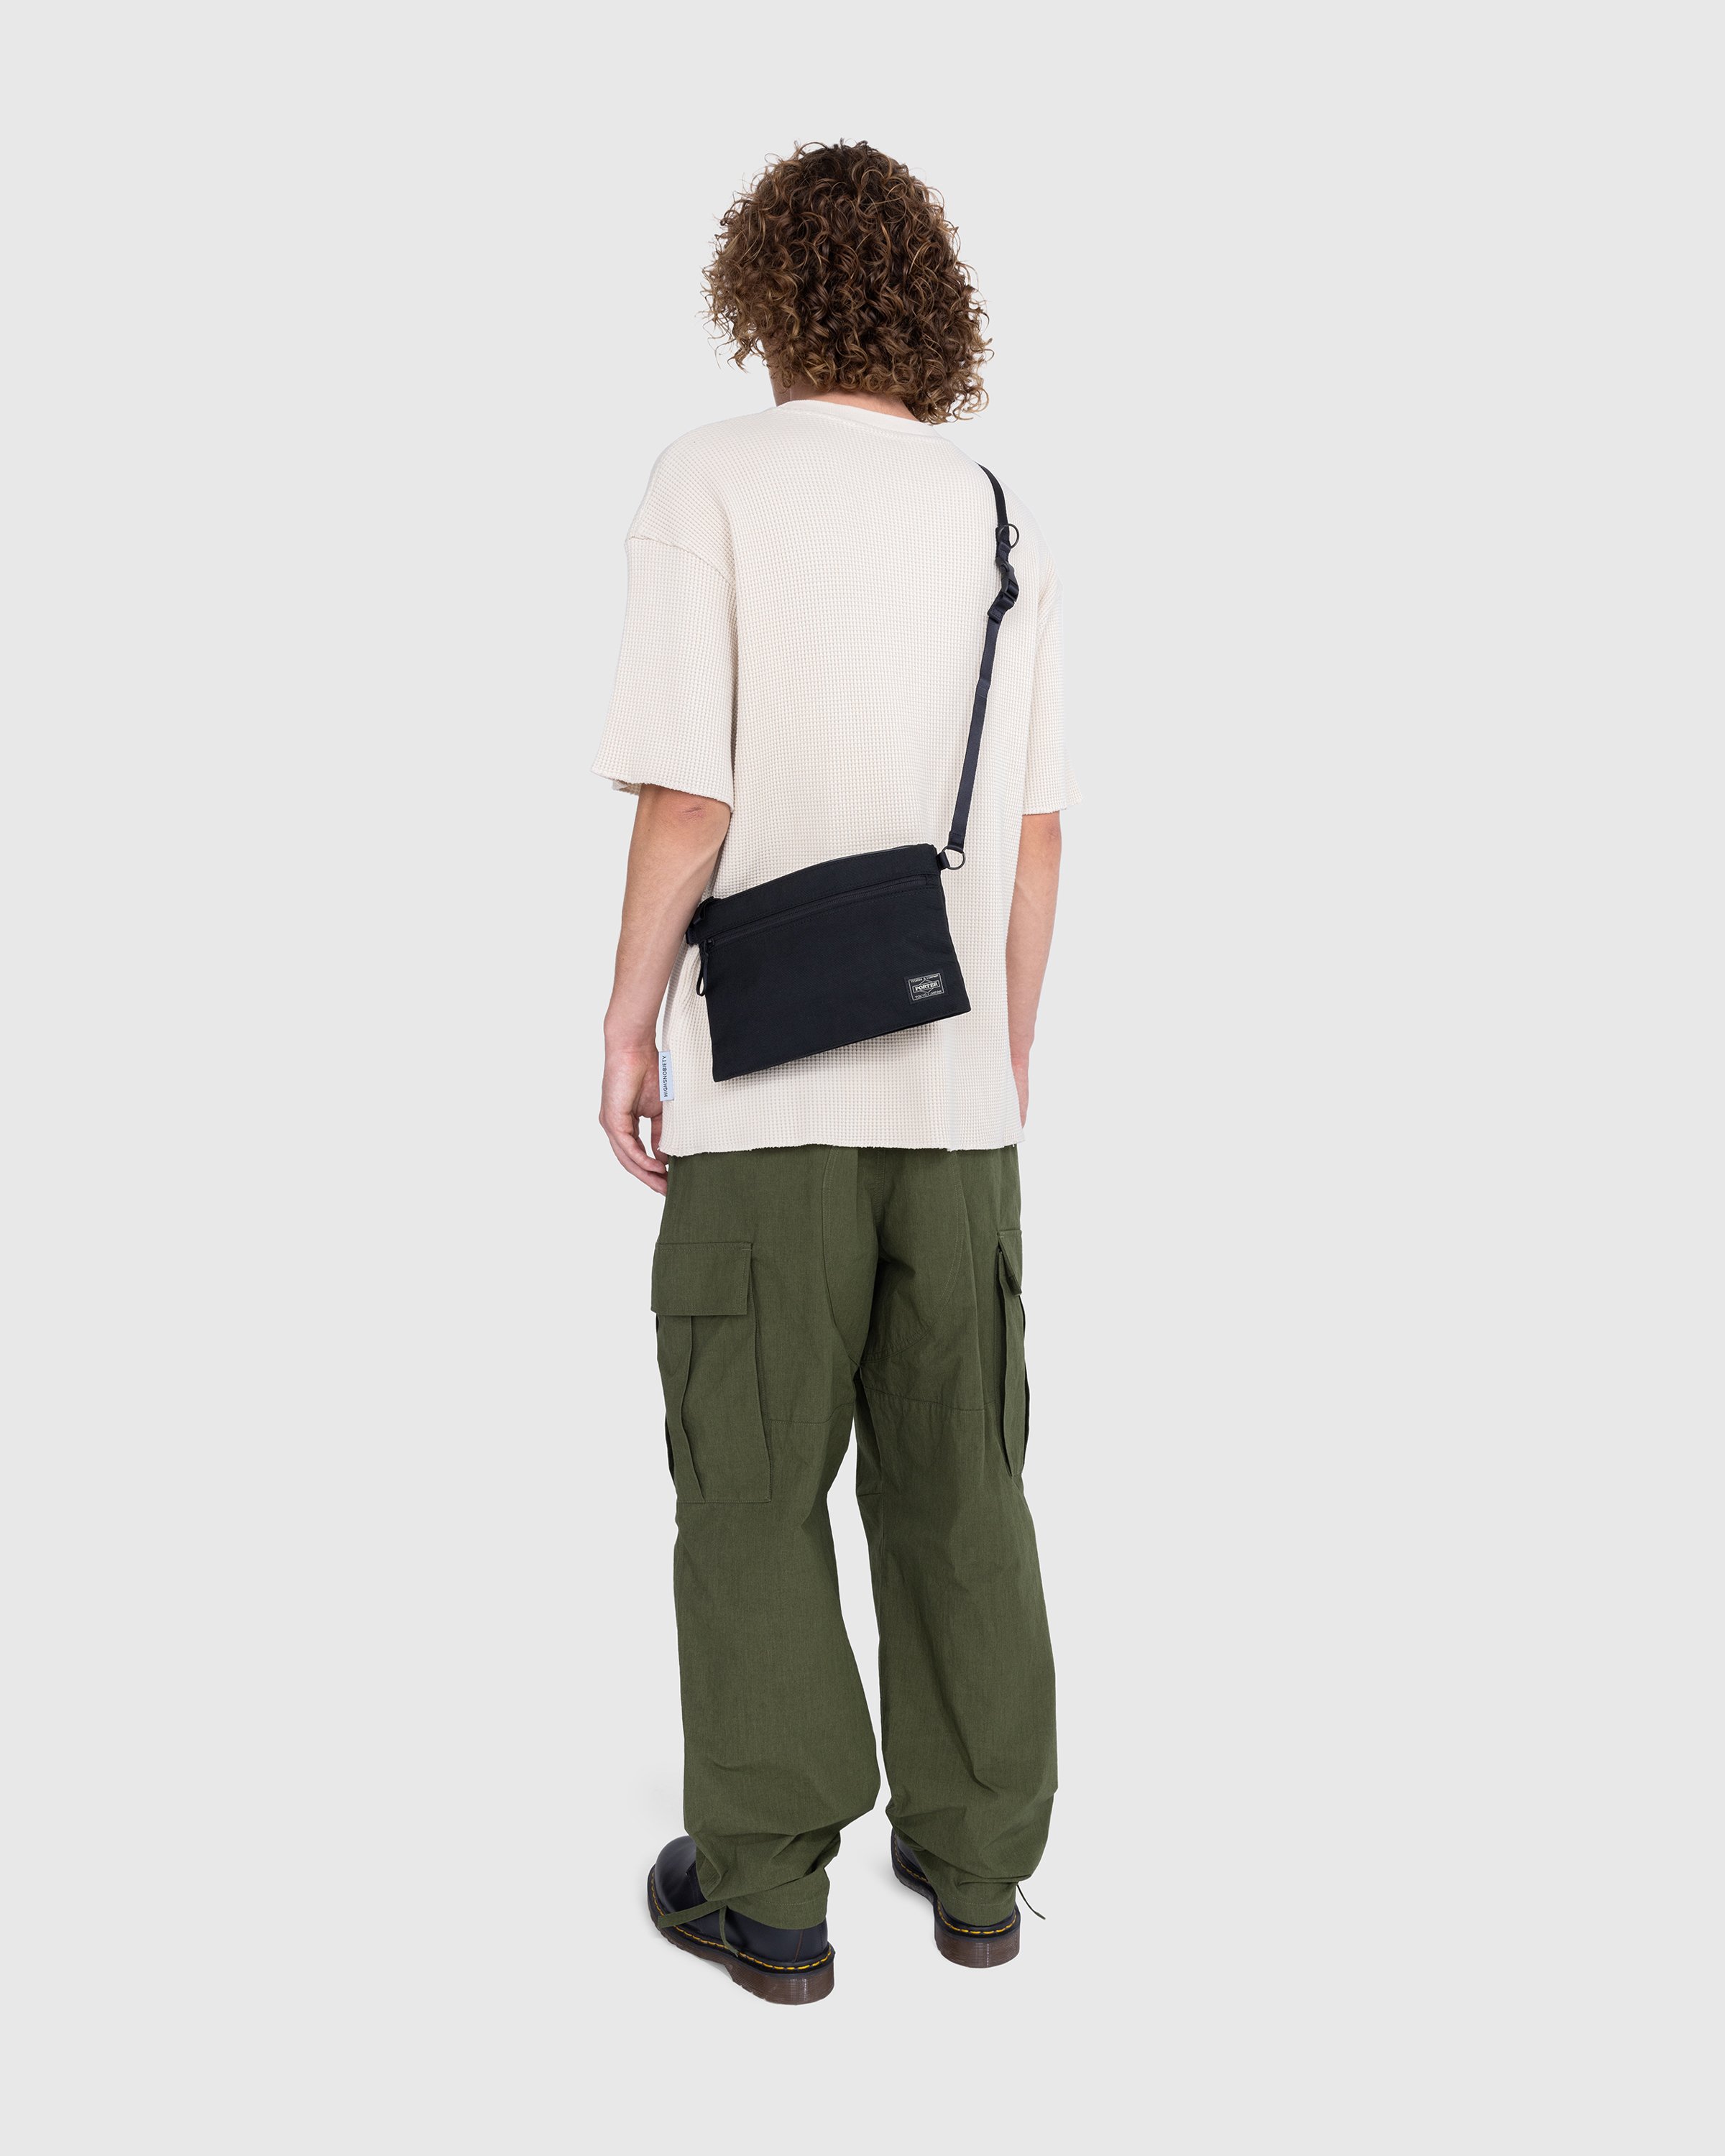 Porter-Yoshida & Co. - Sacoche Hybrid Shoulder Bag Black - Accessories - Black - Image 3